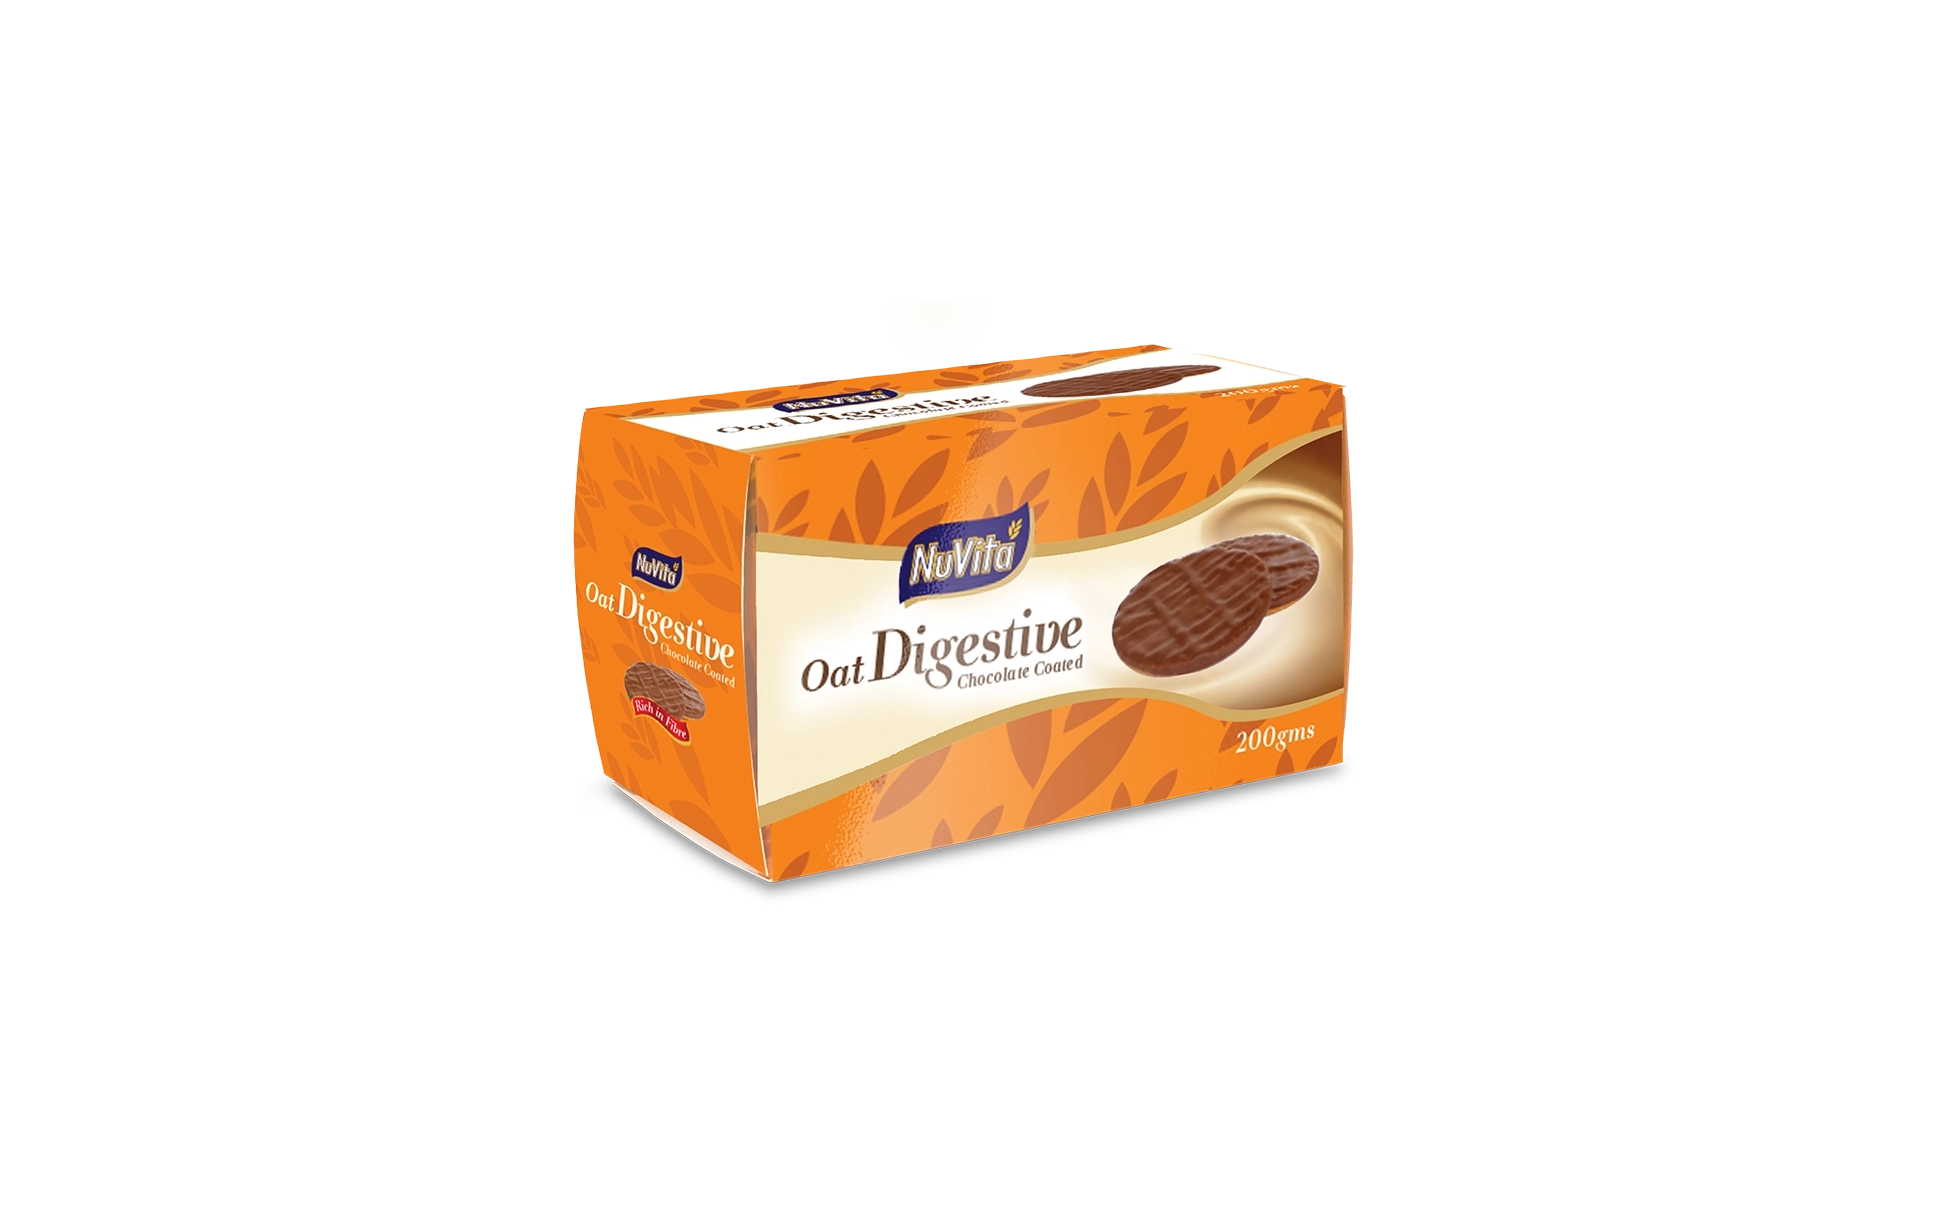 NuVita Chocolate Coated Digestive